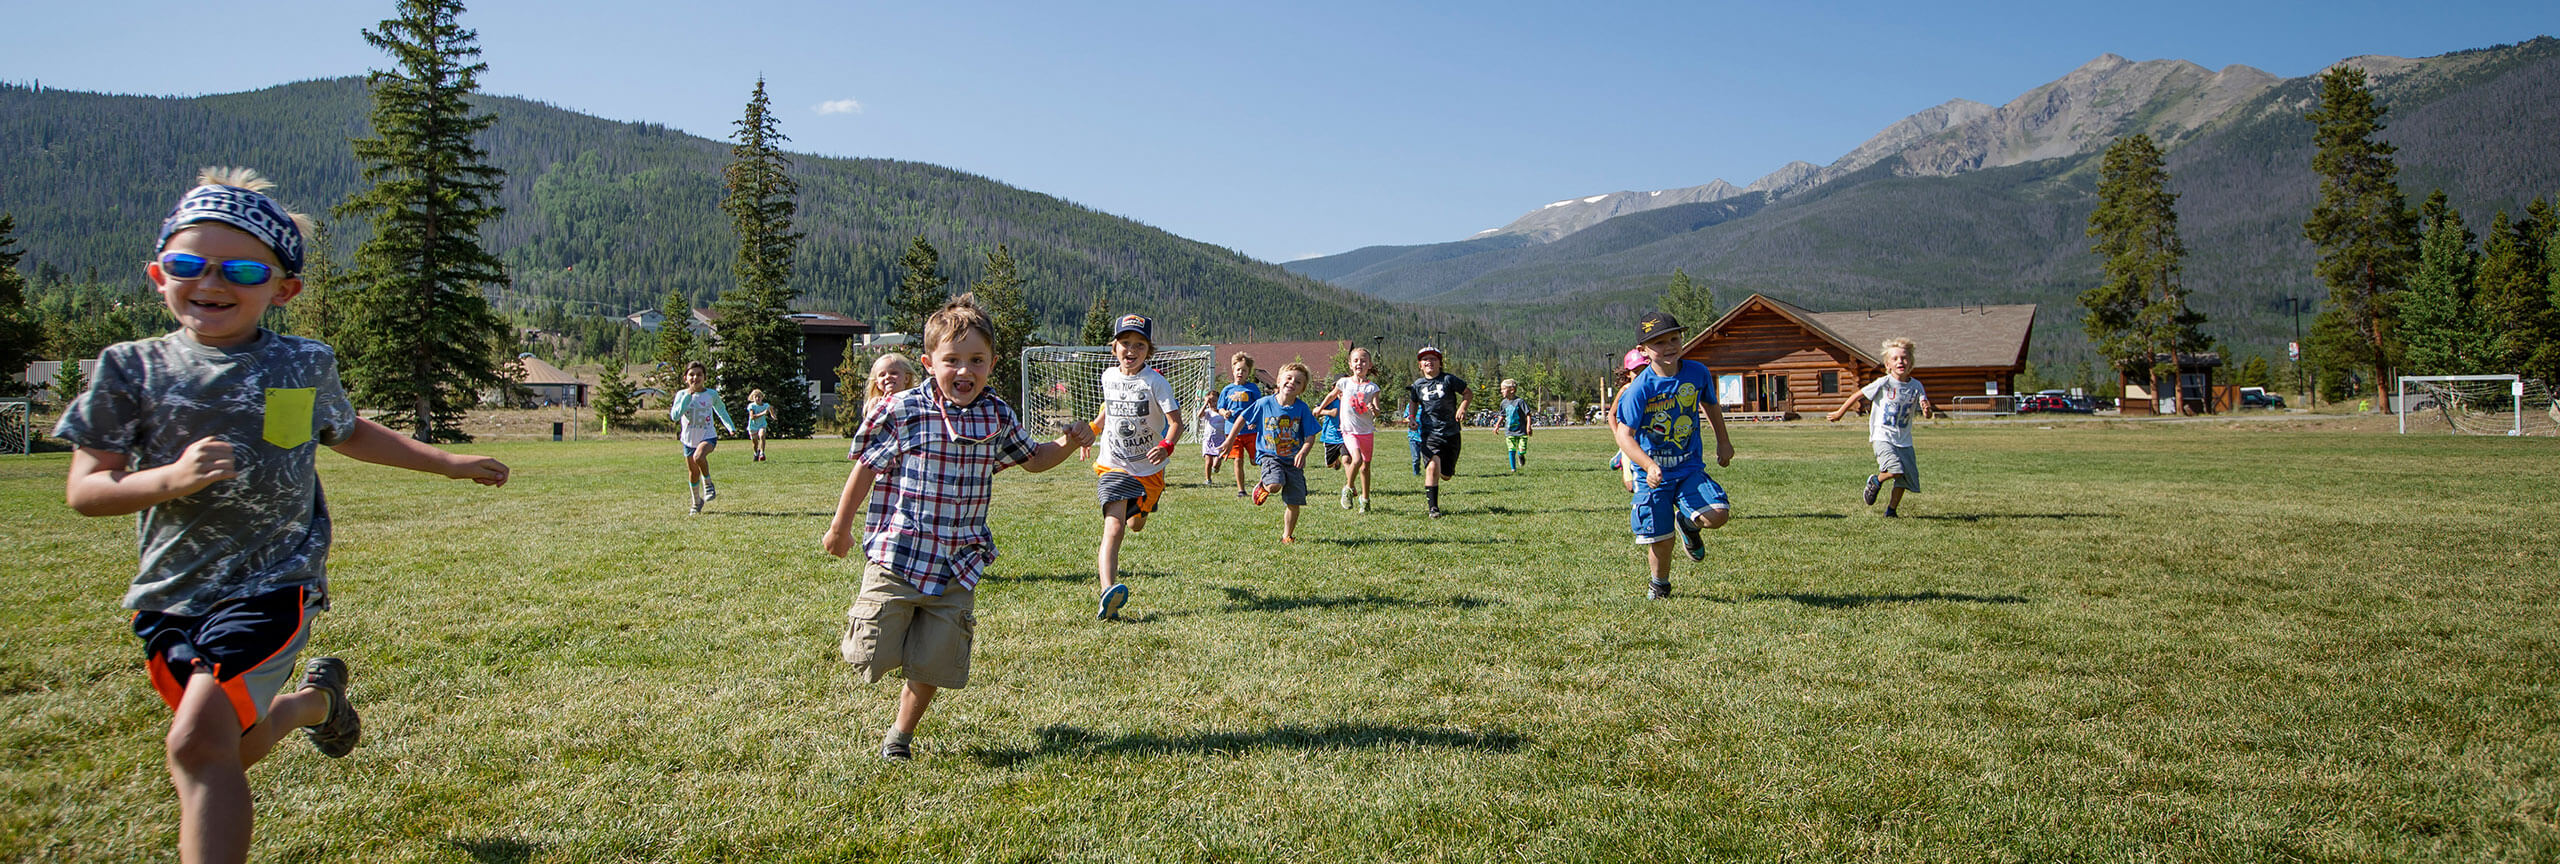 Young kids running through soccer field.